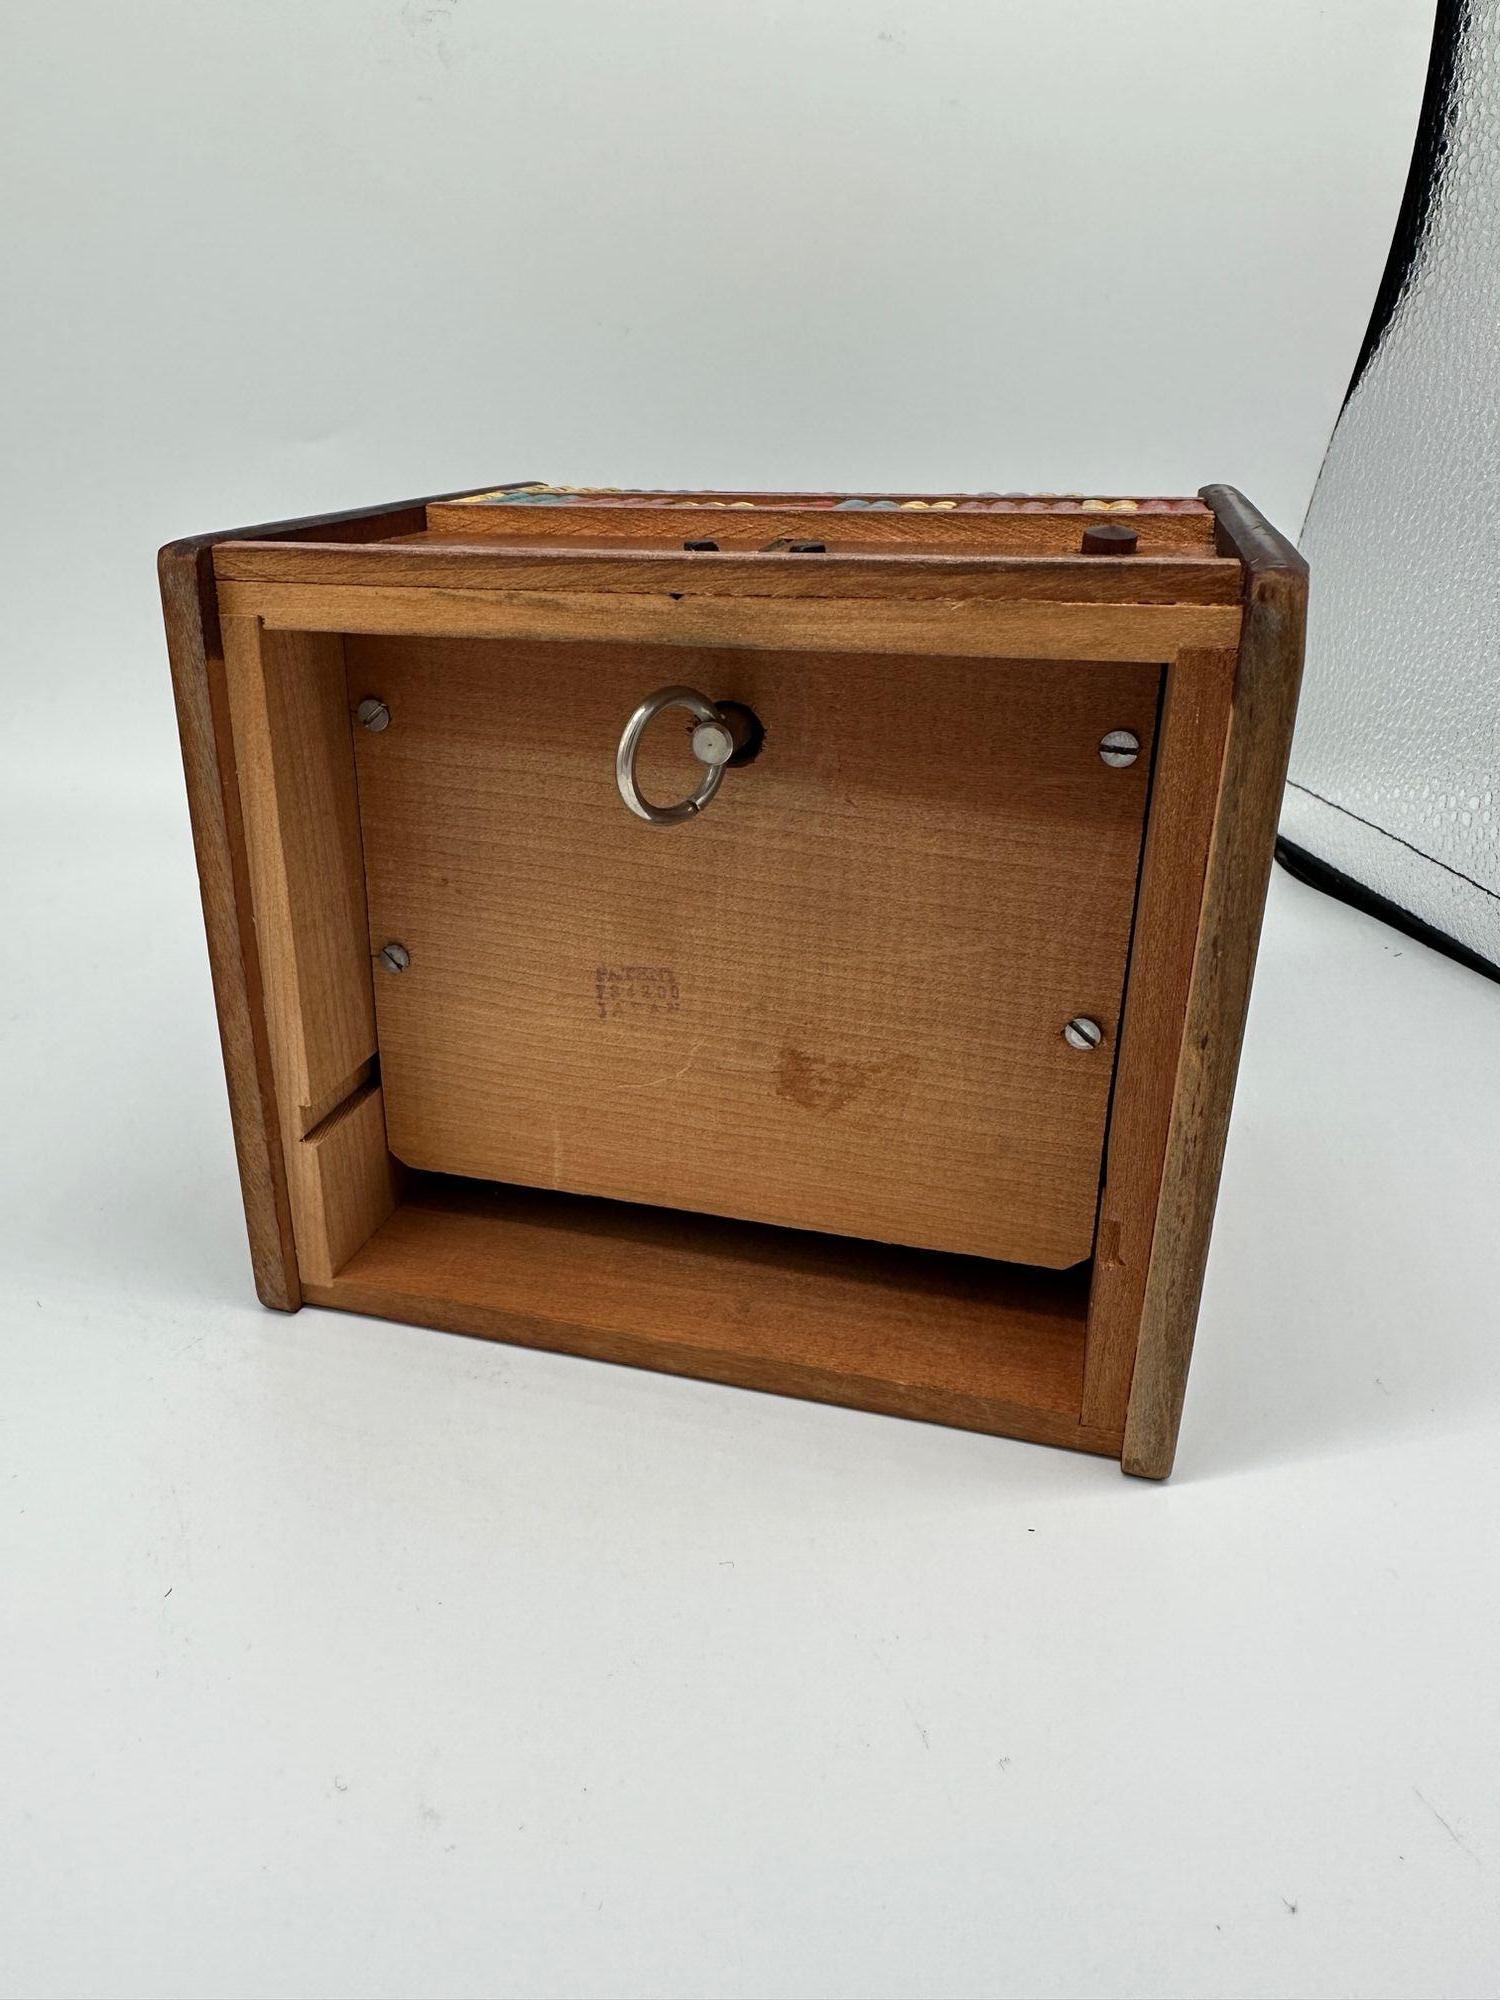 1950s Japanese Carved Wood Music Box Cigarette Dispenser w/ Dog For Sale 2